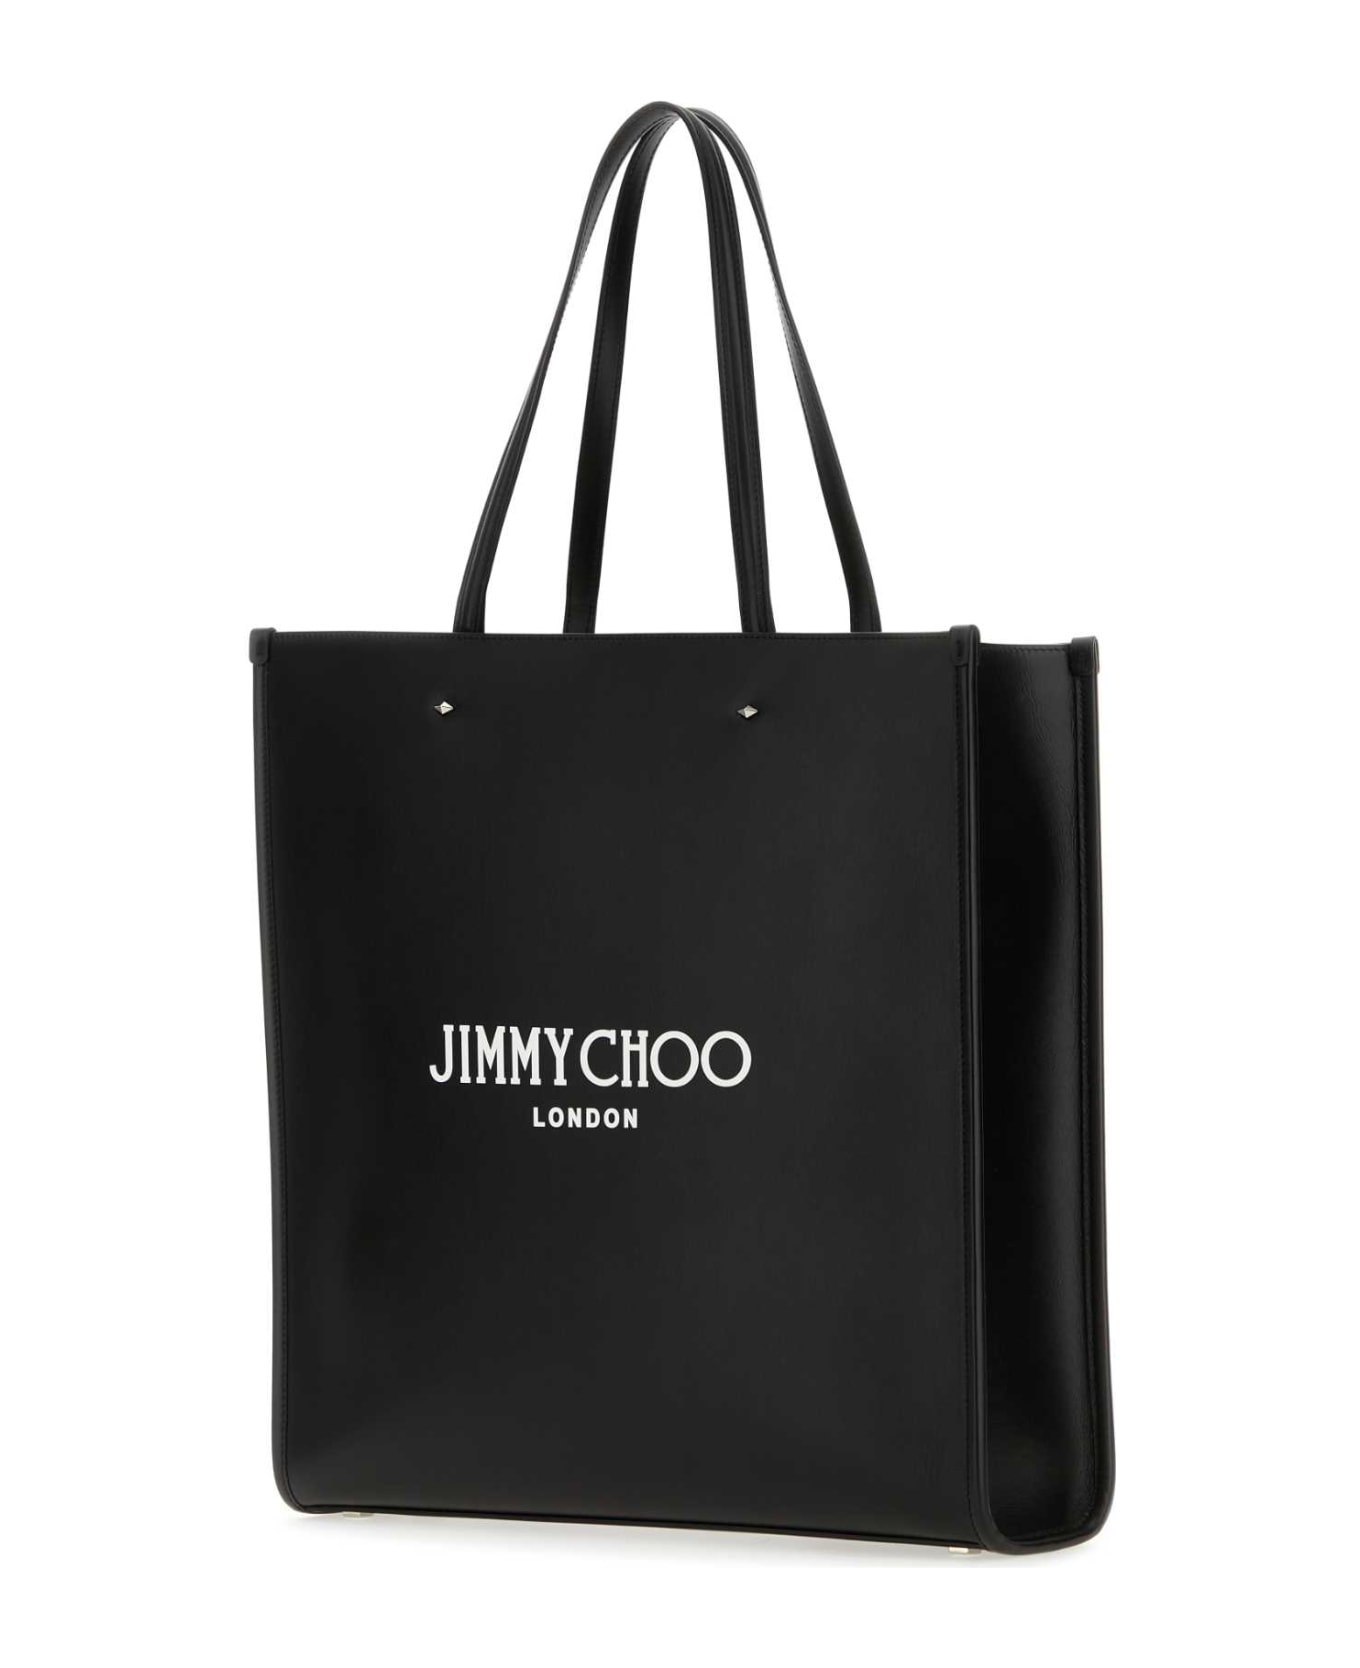 Jimmy Choo Black Leather N/s Tote M Shopping Bag - BLACKWHITESILVER